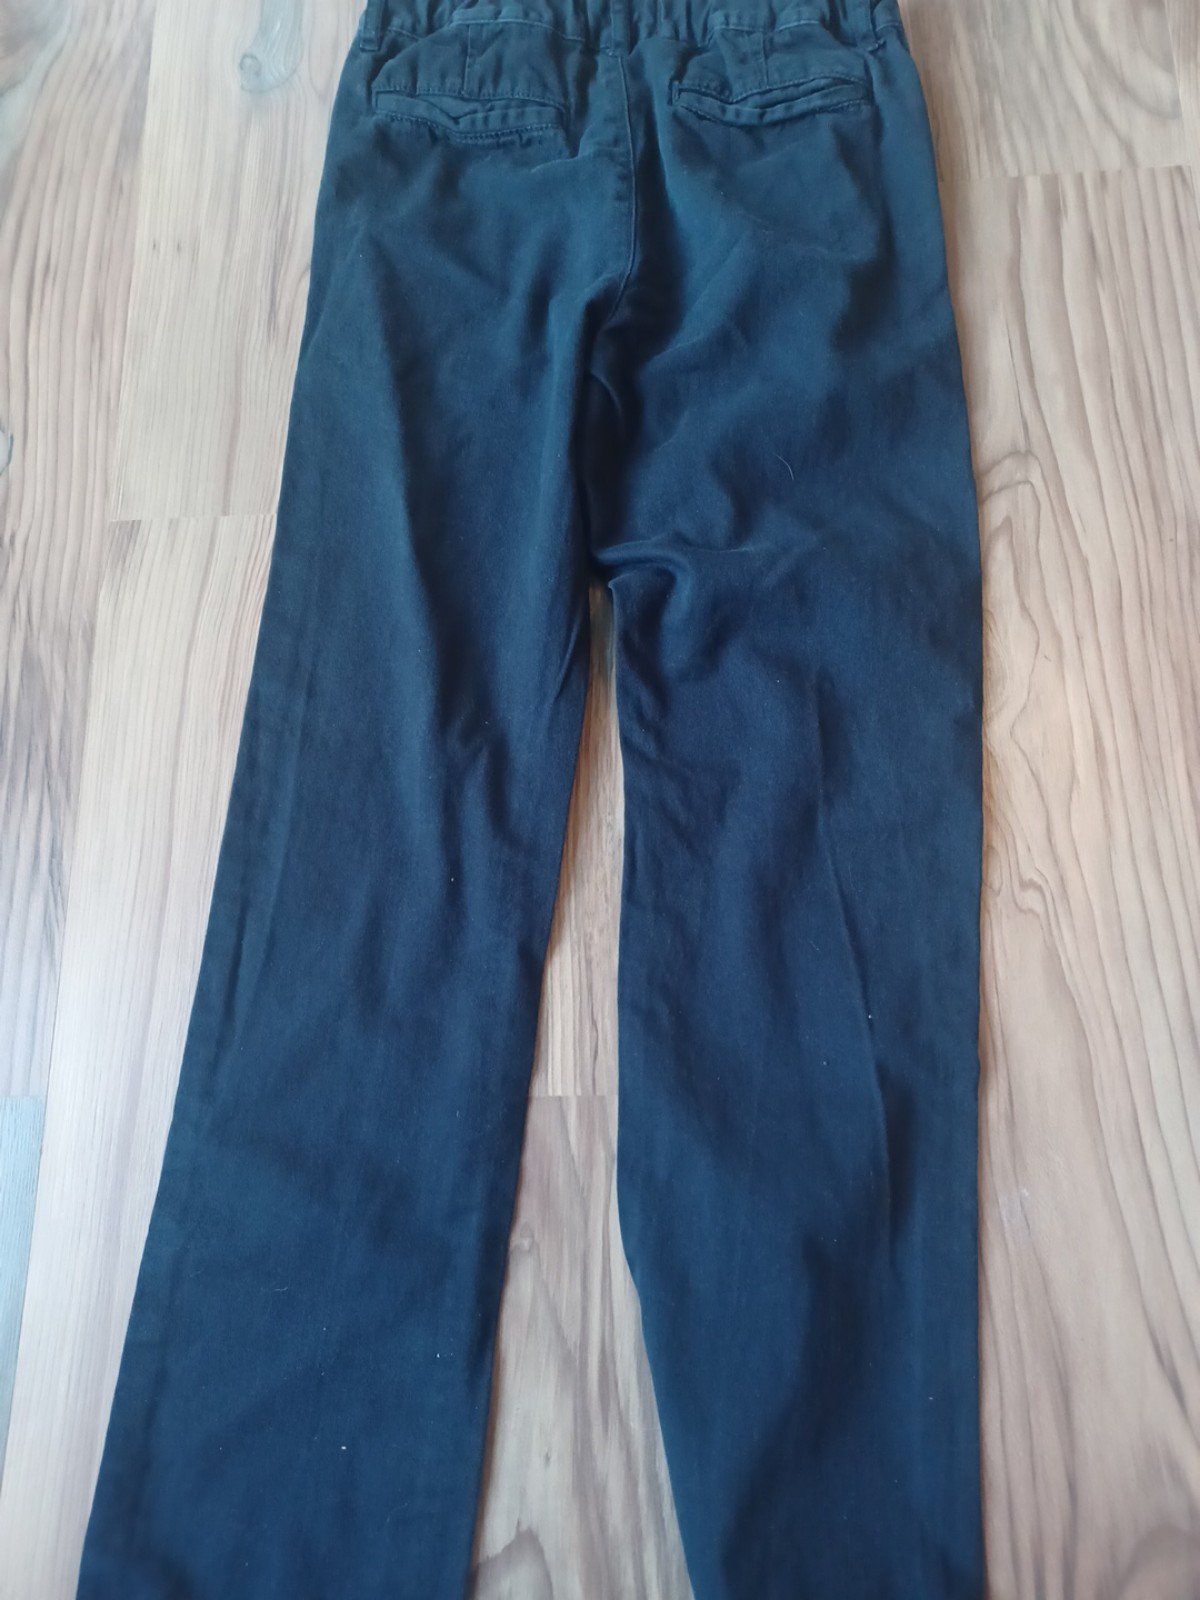 good price navy blue pants school uniform size 10 GmlsiFcjK online store